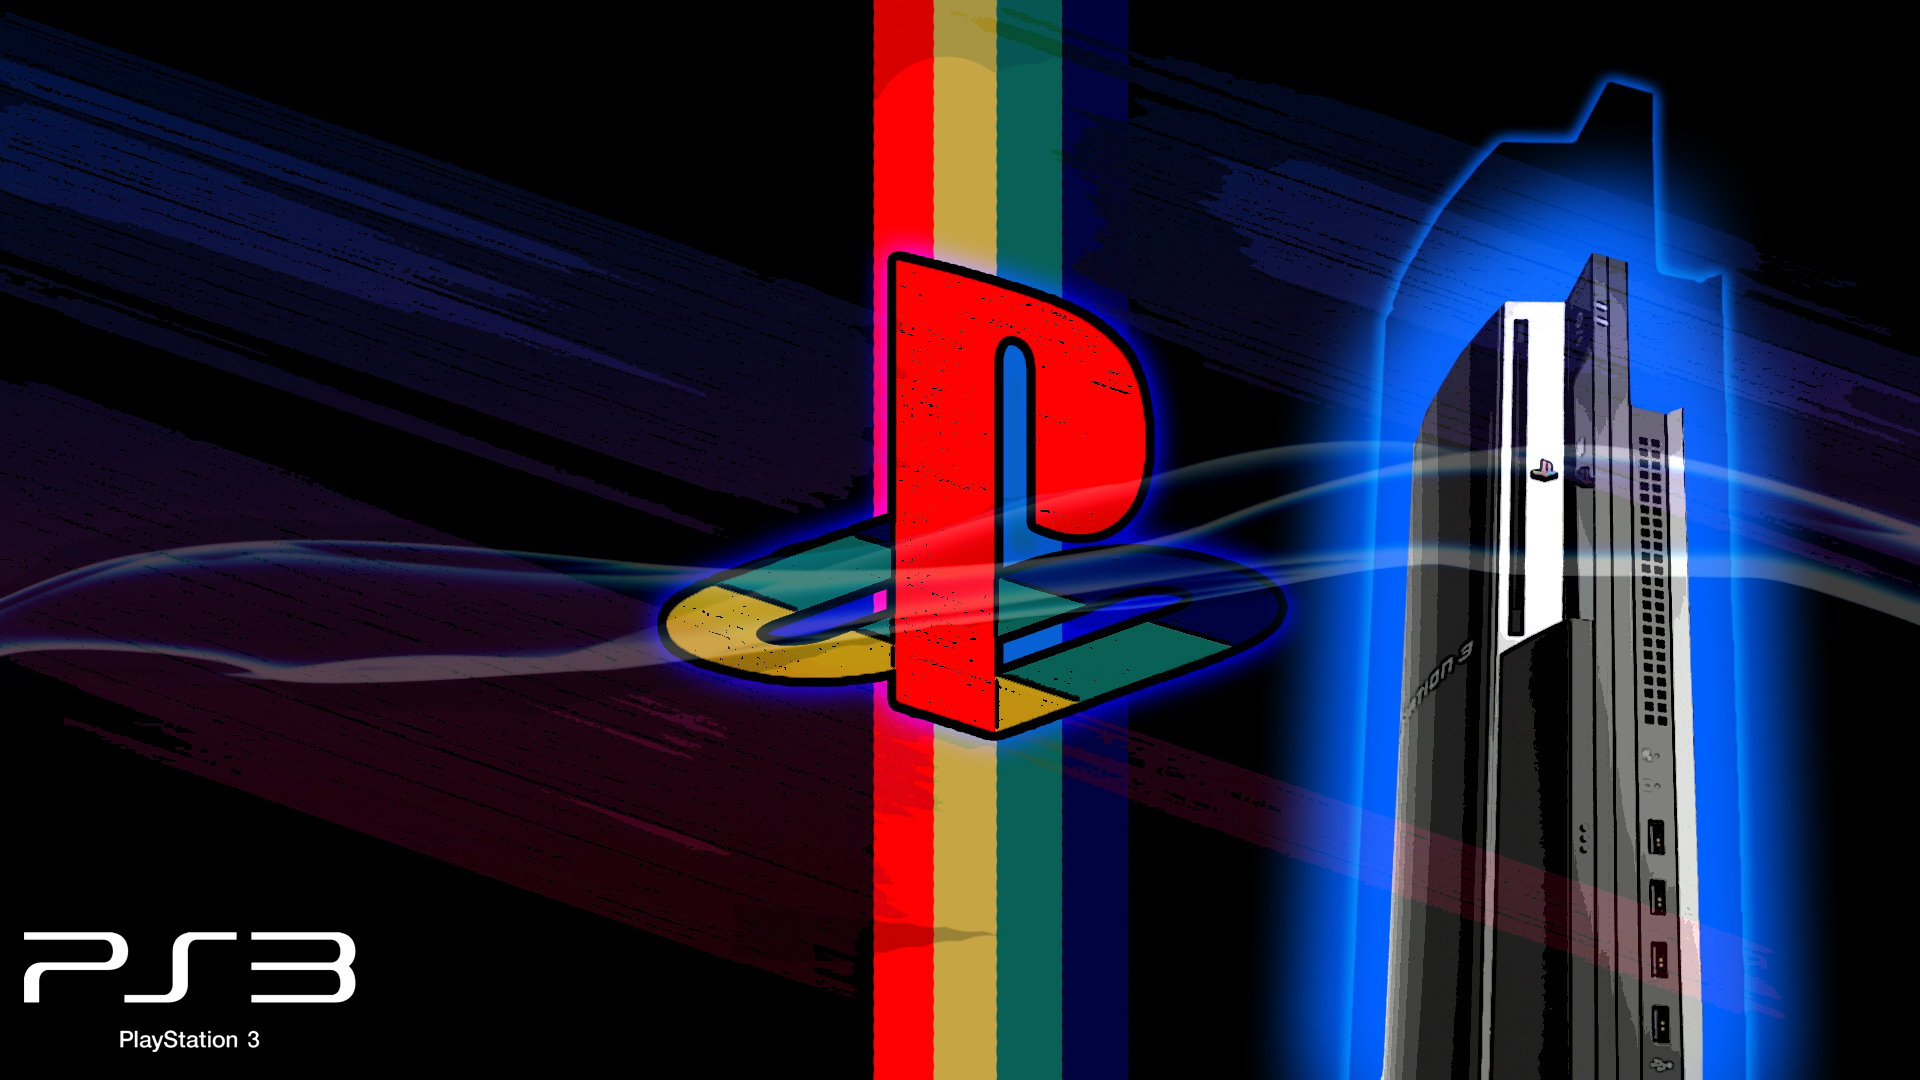 playstation 3 logo wallpaperPS Logo and PS3 Wallpaper UWv4aHdT